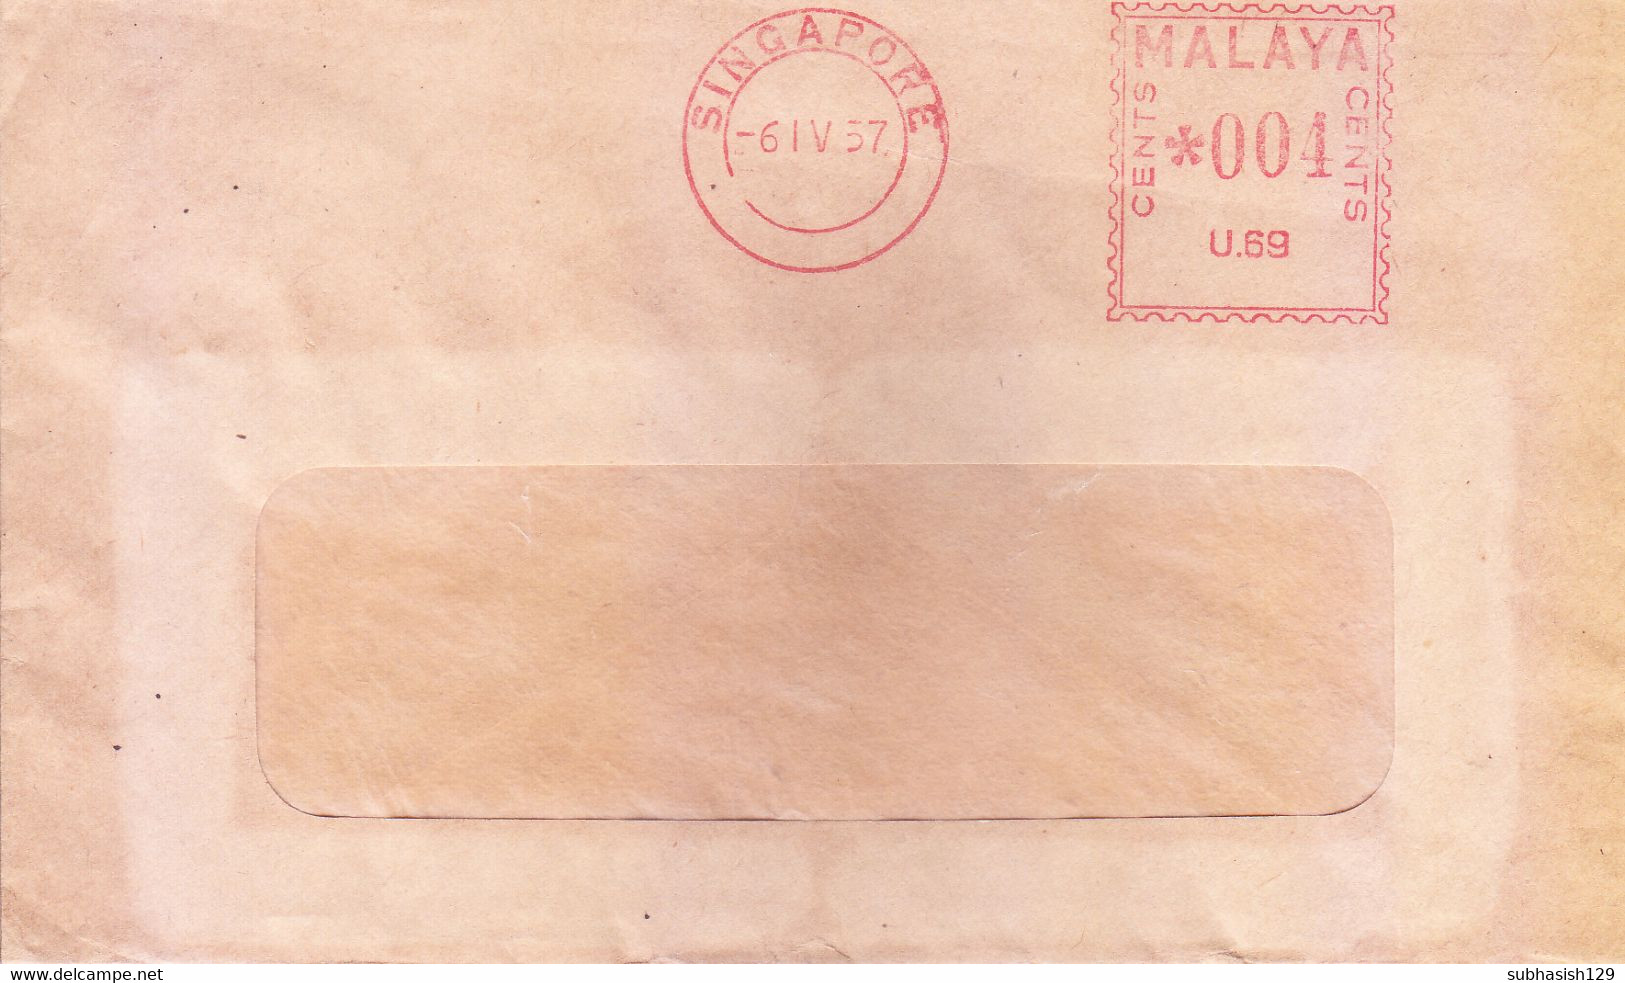 MALAYSIA / MALAYA, SINGAPORE : METER FRANKING : YEAR 1957 - Malayan Postal Union